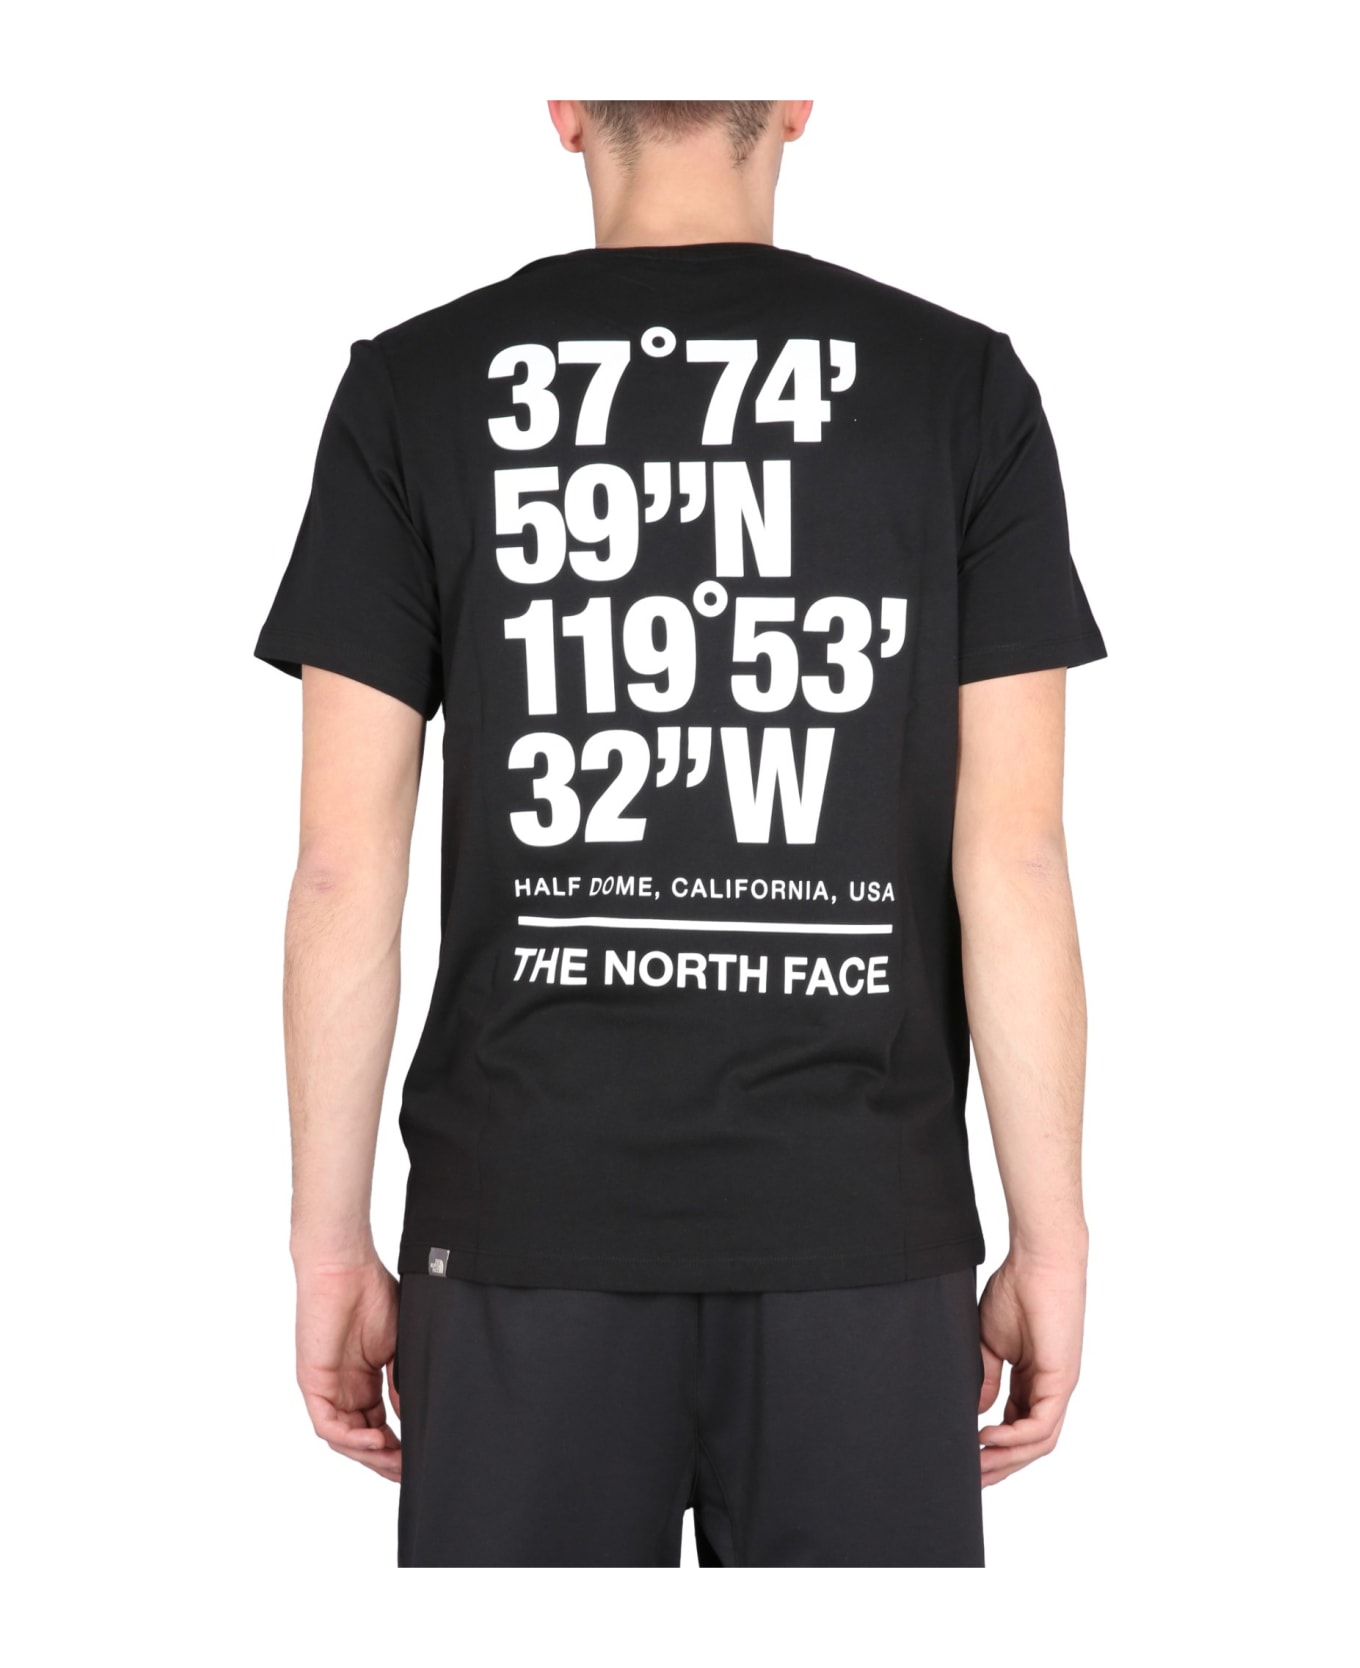 The North Face Crewneck T-shirt - BLACK